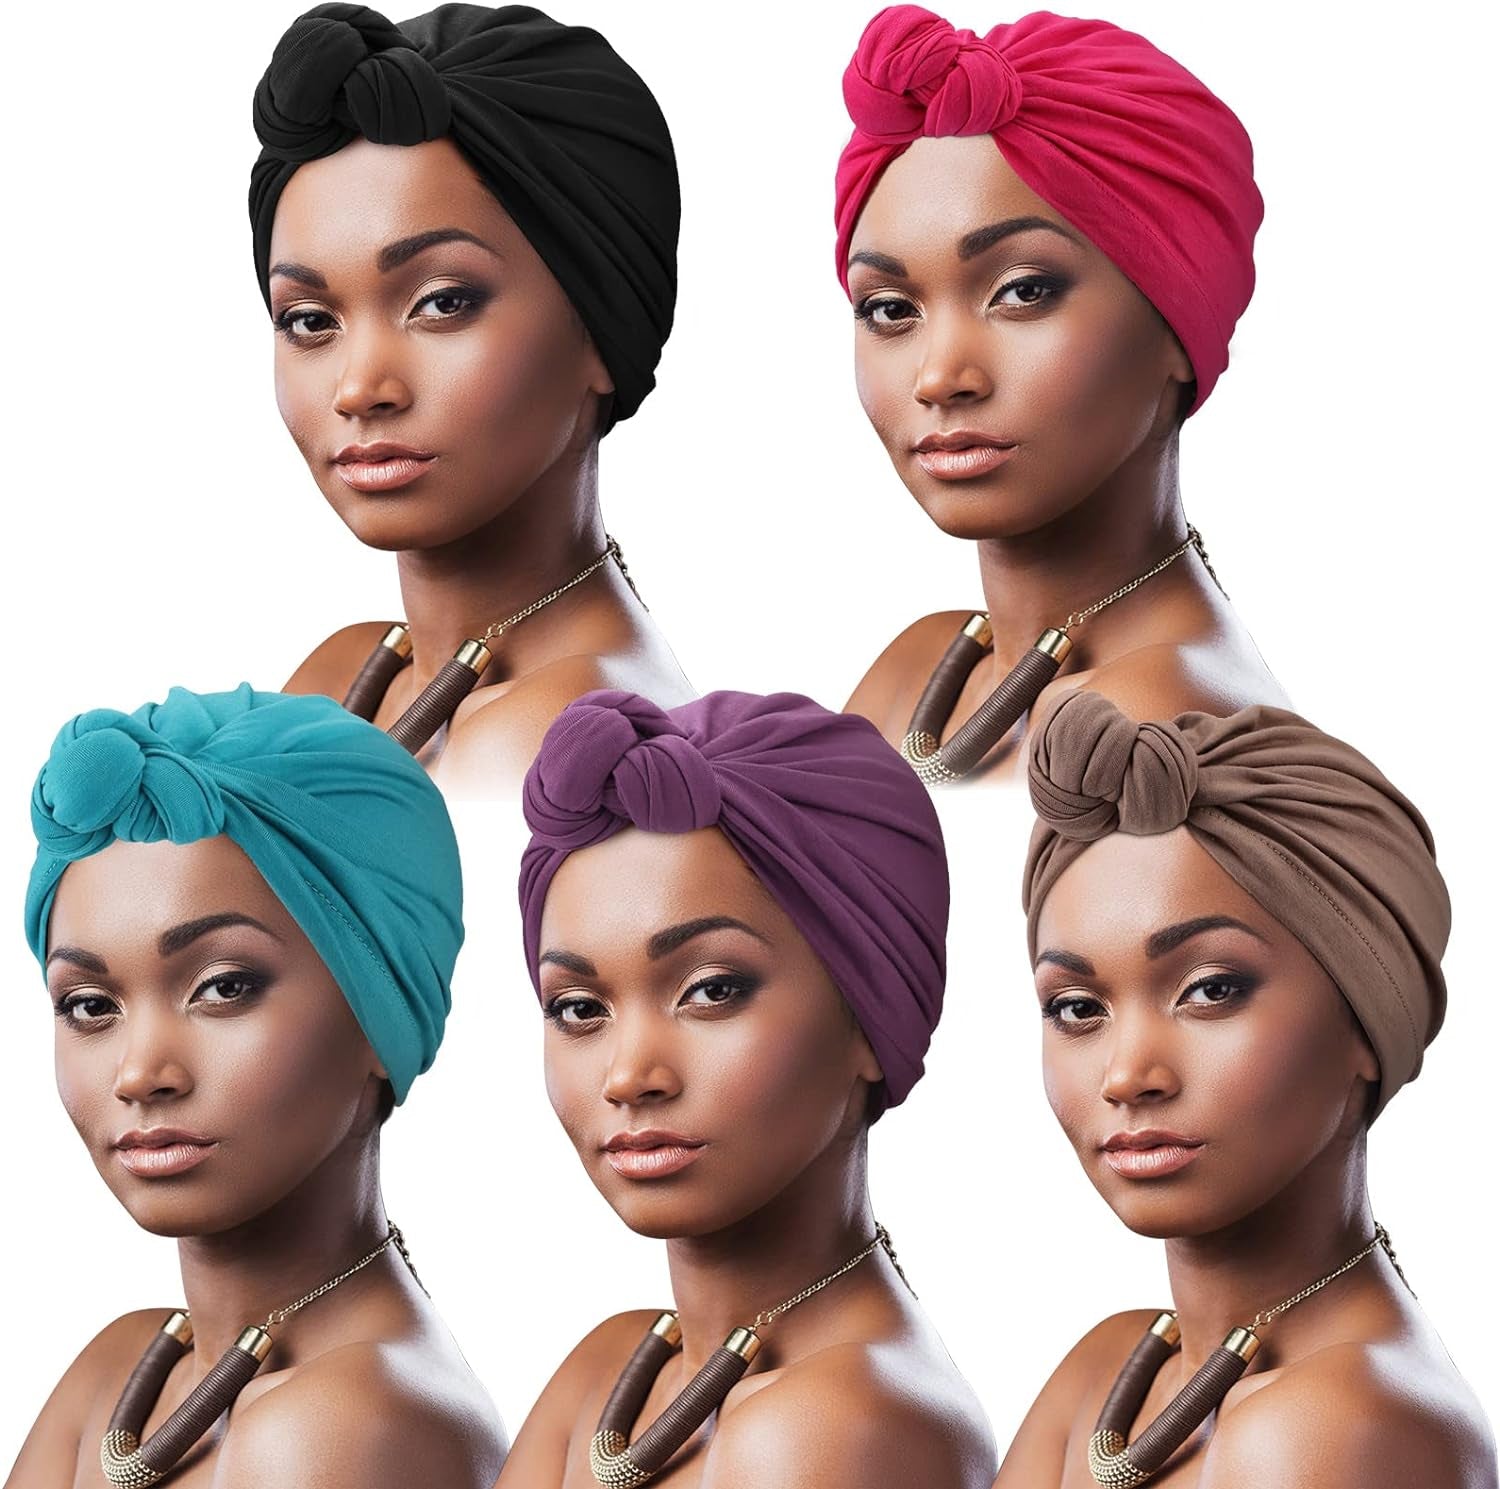 2pcs African Turban Headwrap Hat Accessories for Women Girls Wedding